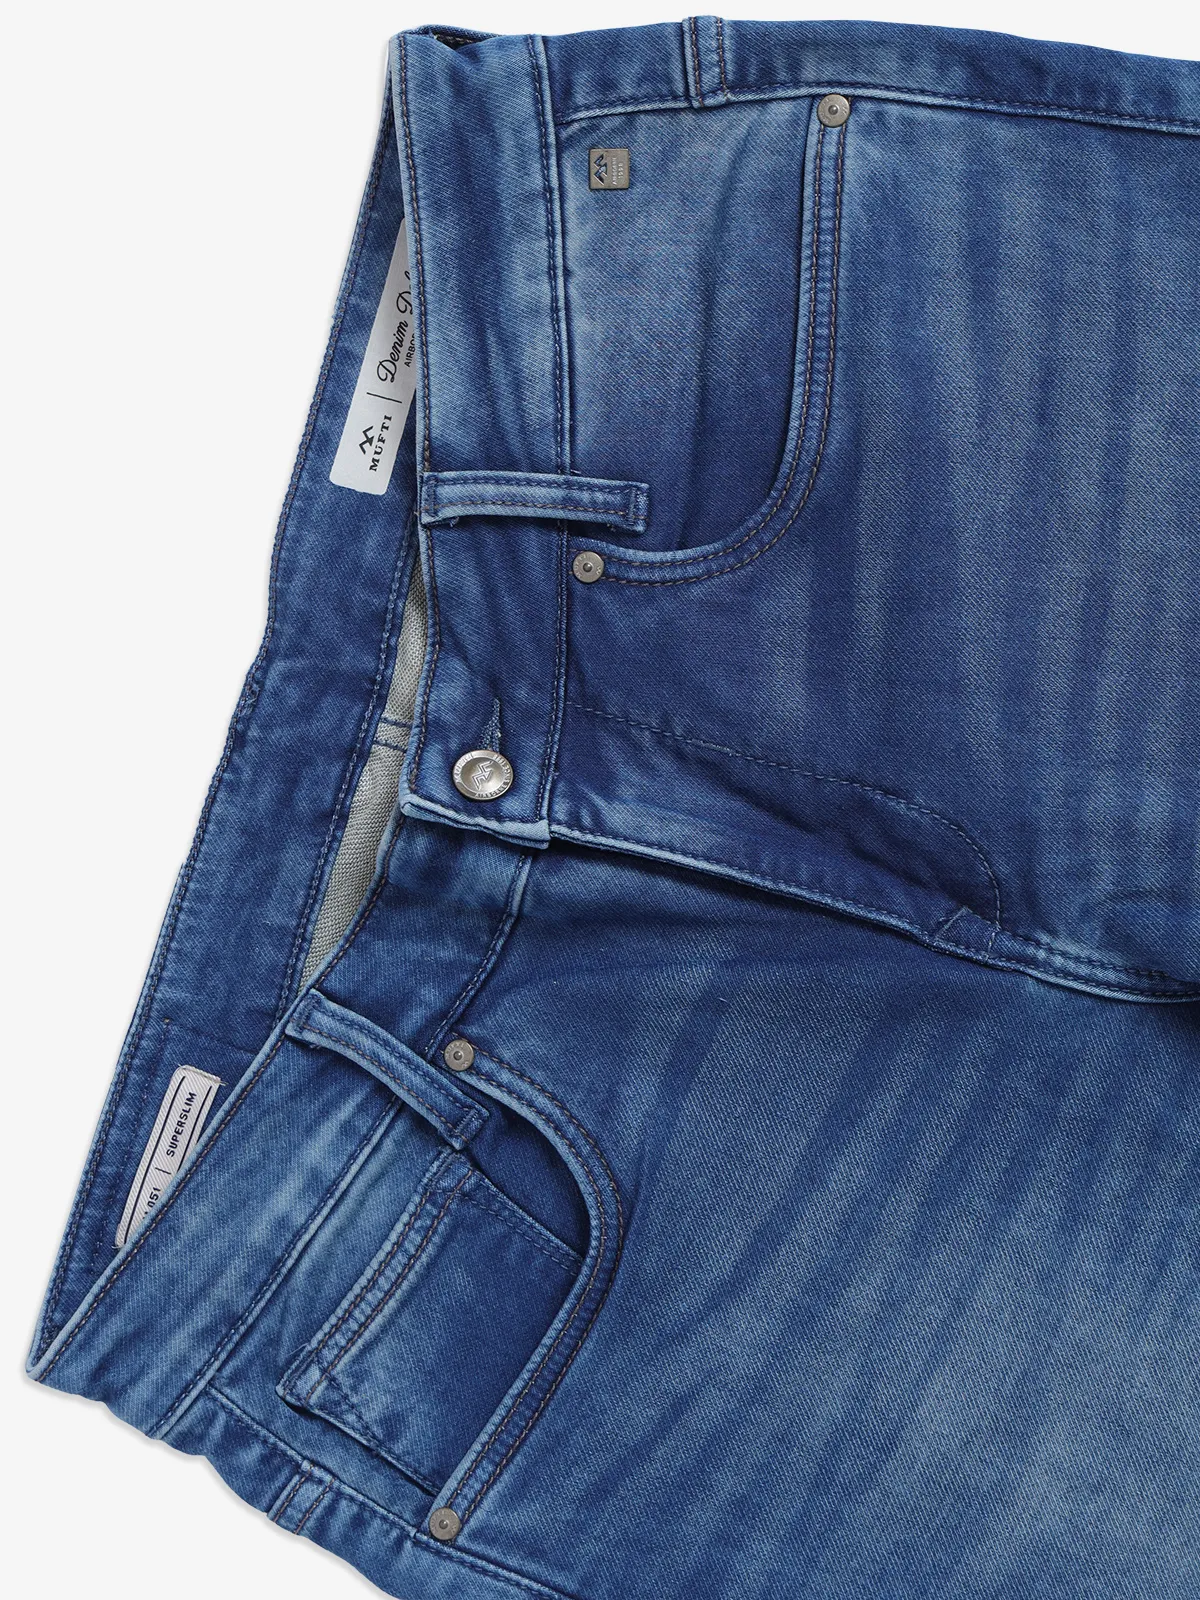 MUFTI washed blue super slim fit jeans